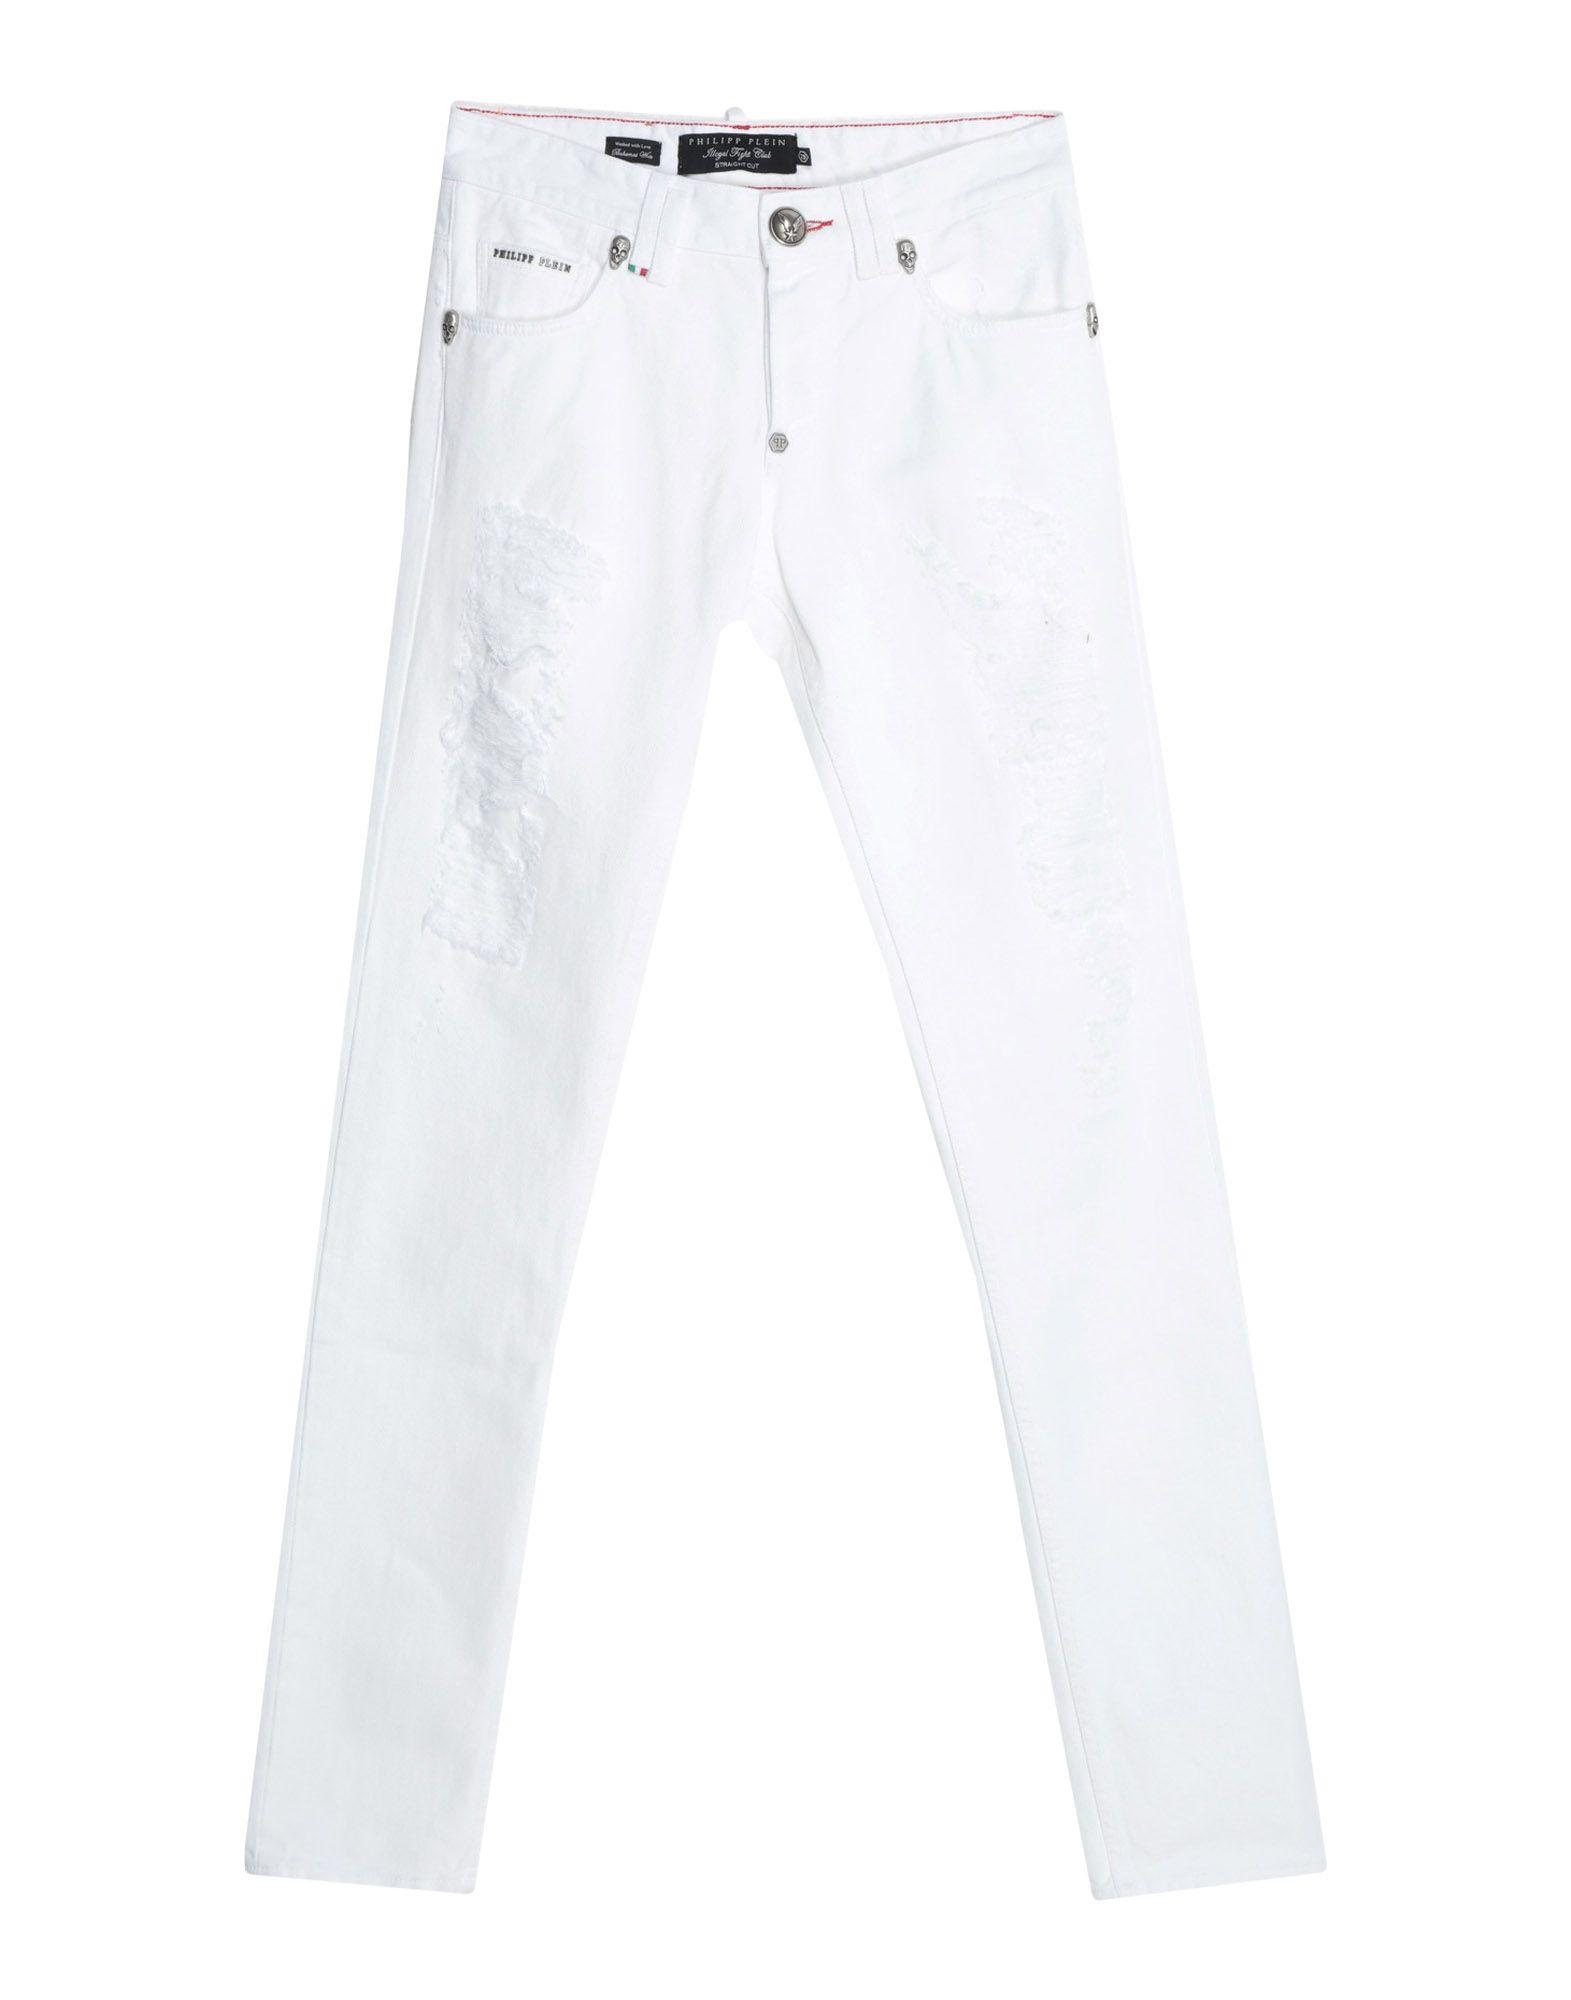 Philipp Plein Denim Pants in White for 